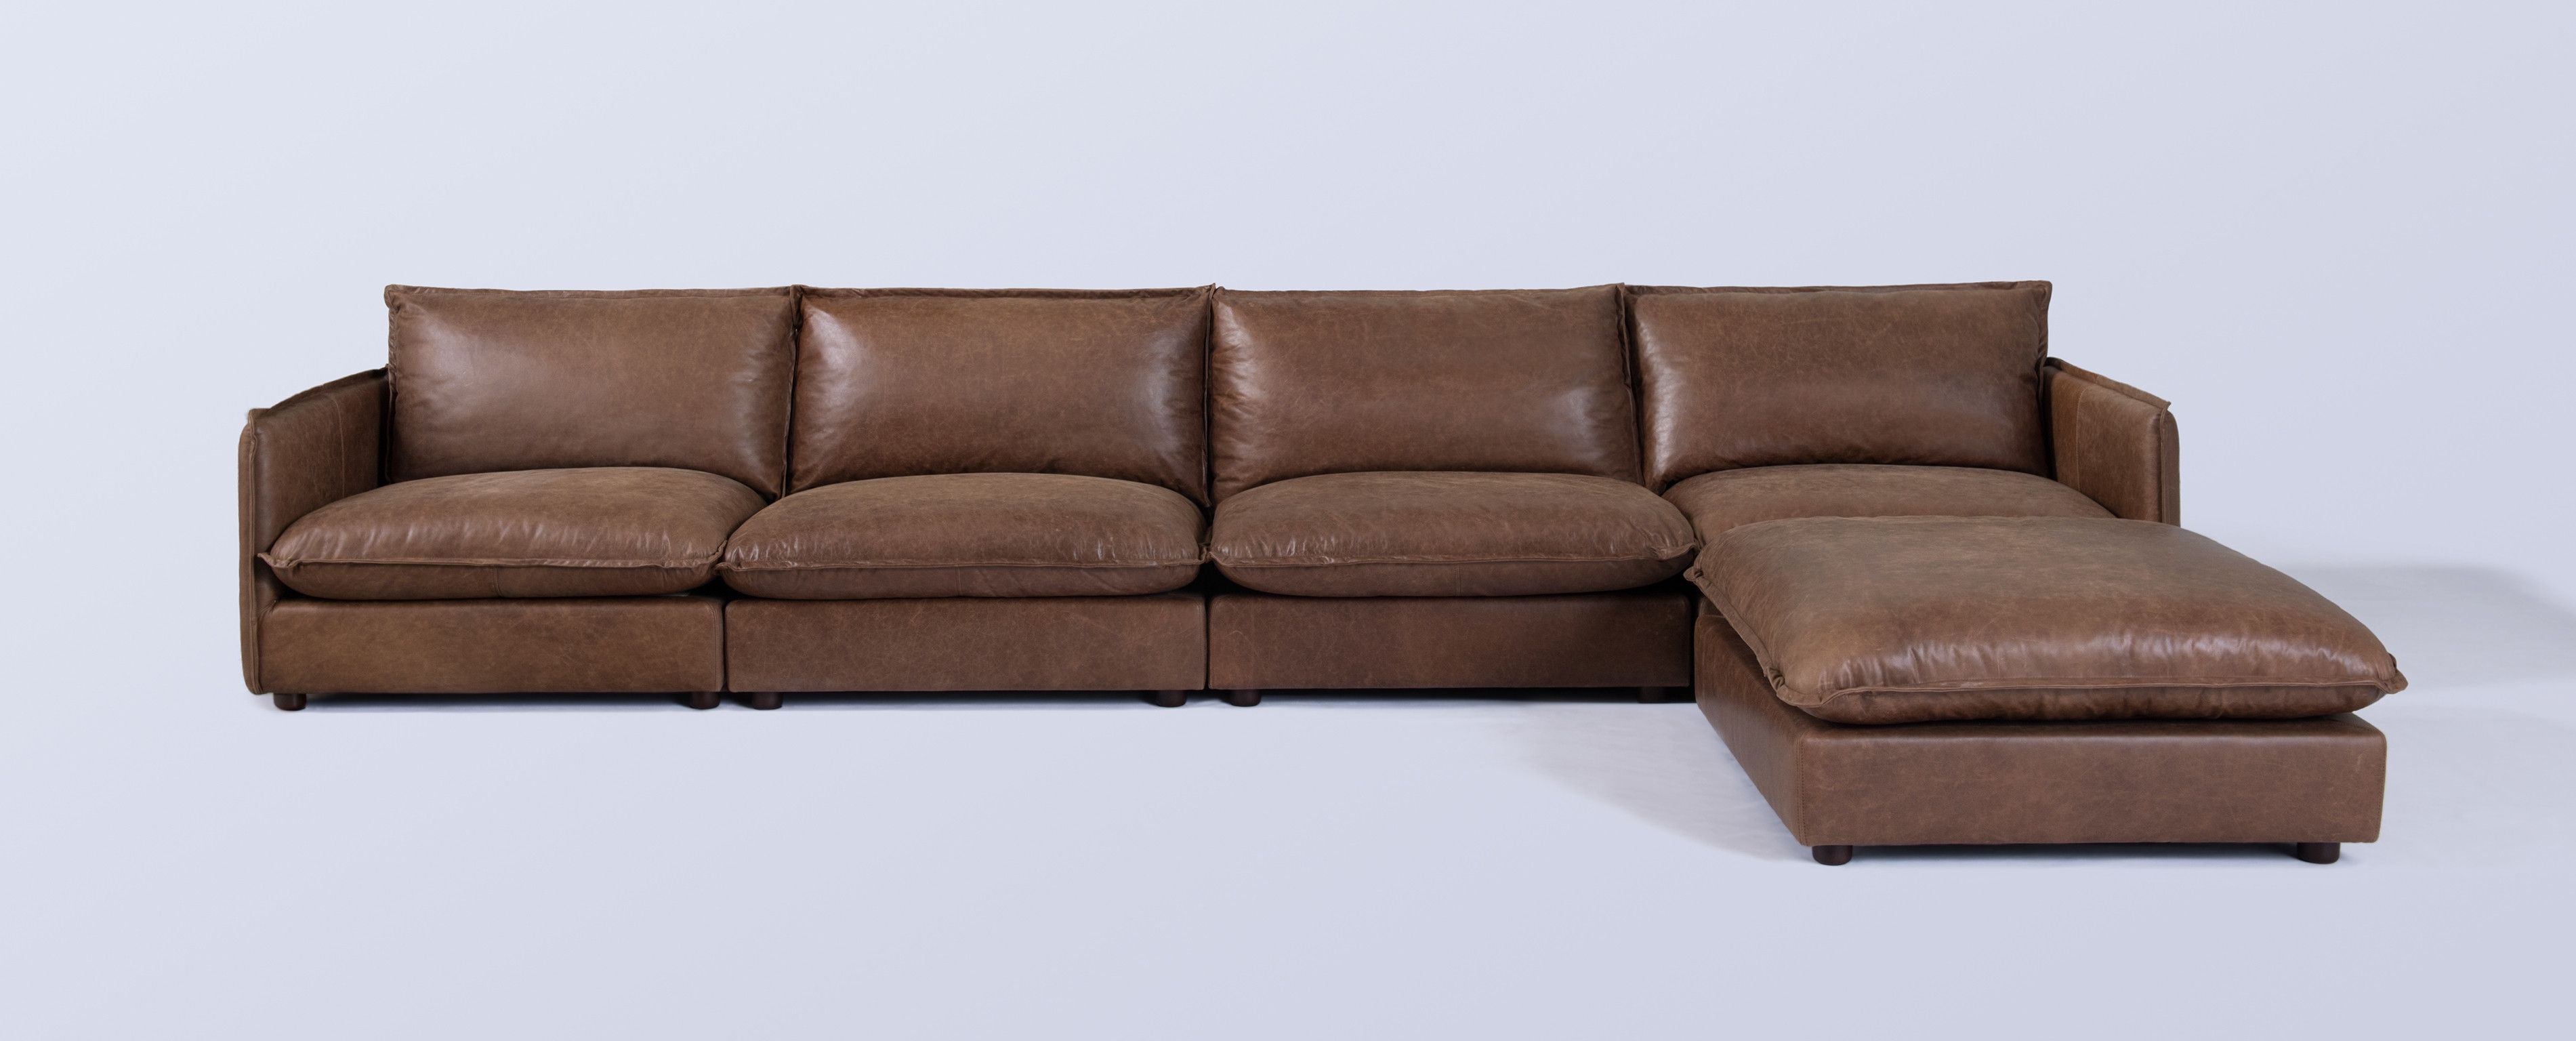 Sofa Modular Leather Cornerofas Uk Melbournetaceyectional And Pertaining To Nz Sectional Sofas (View 3 of 10)